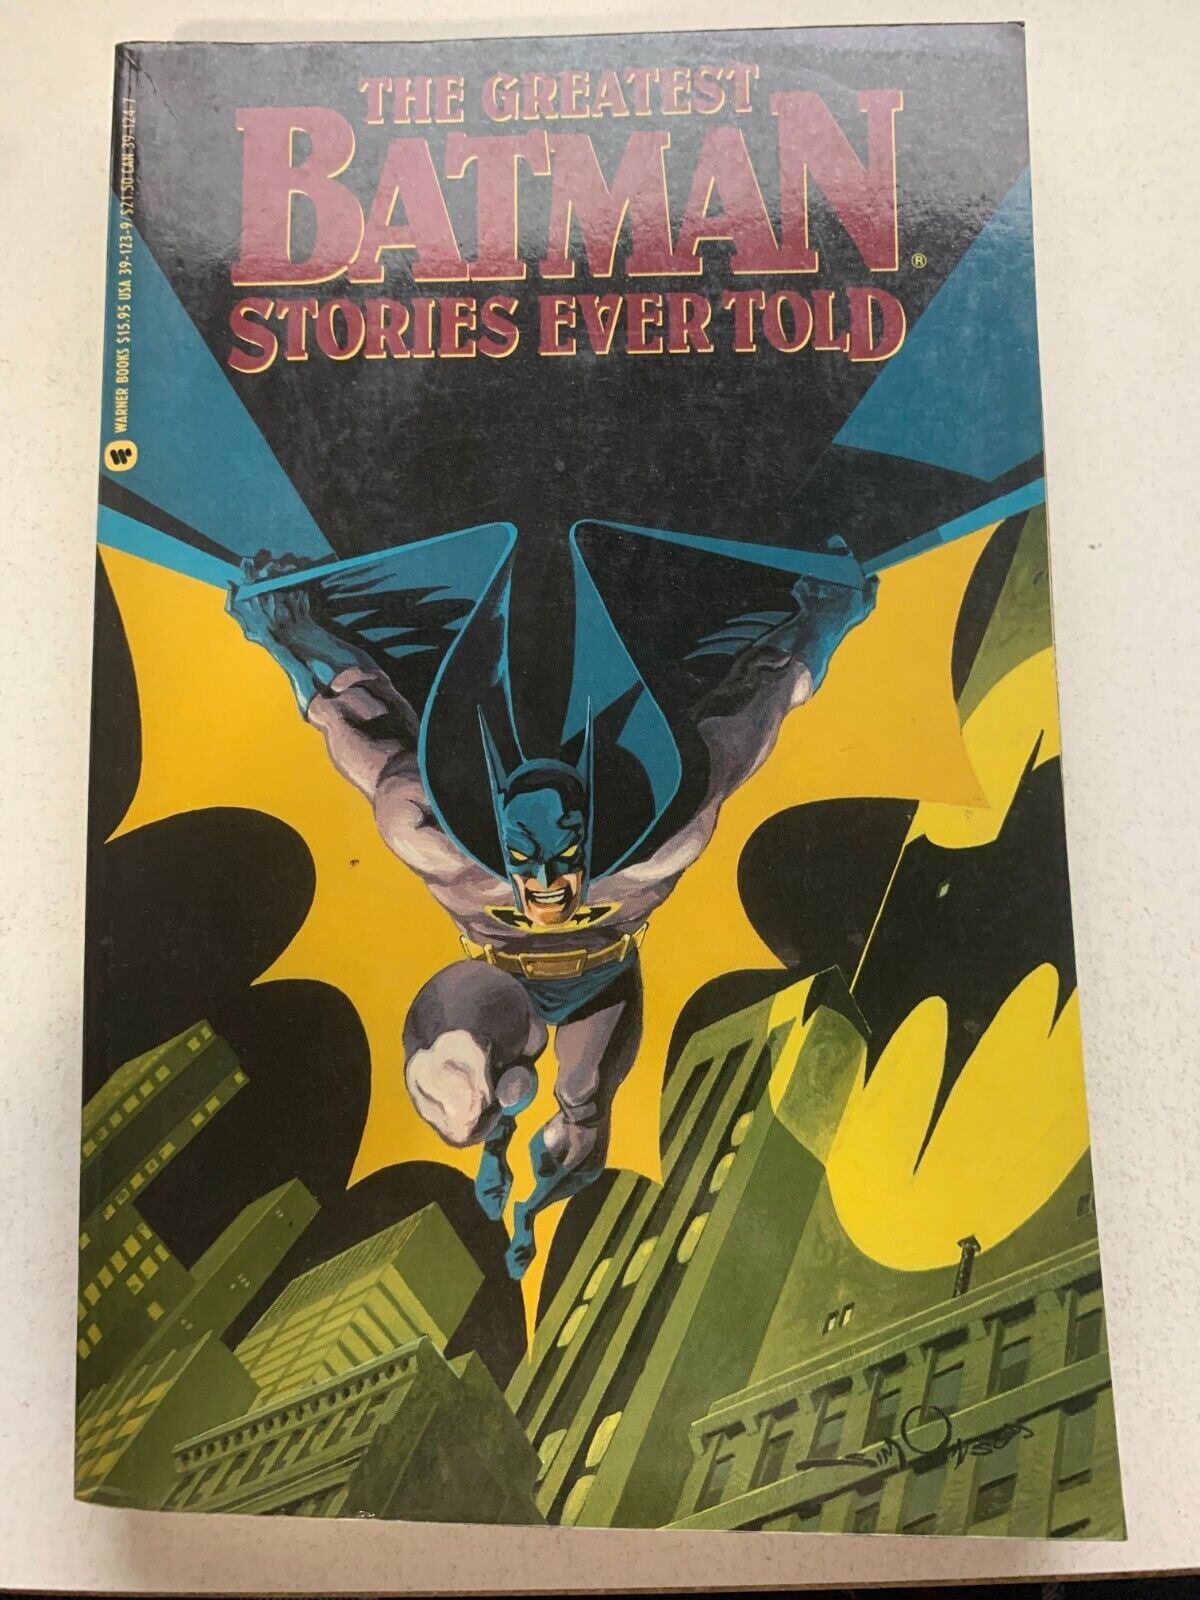 The Greatest Batman Stories Ever Told (Warner Books June 1989)